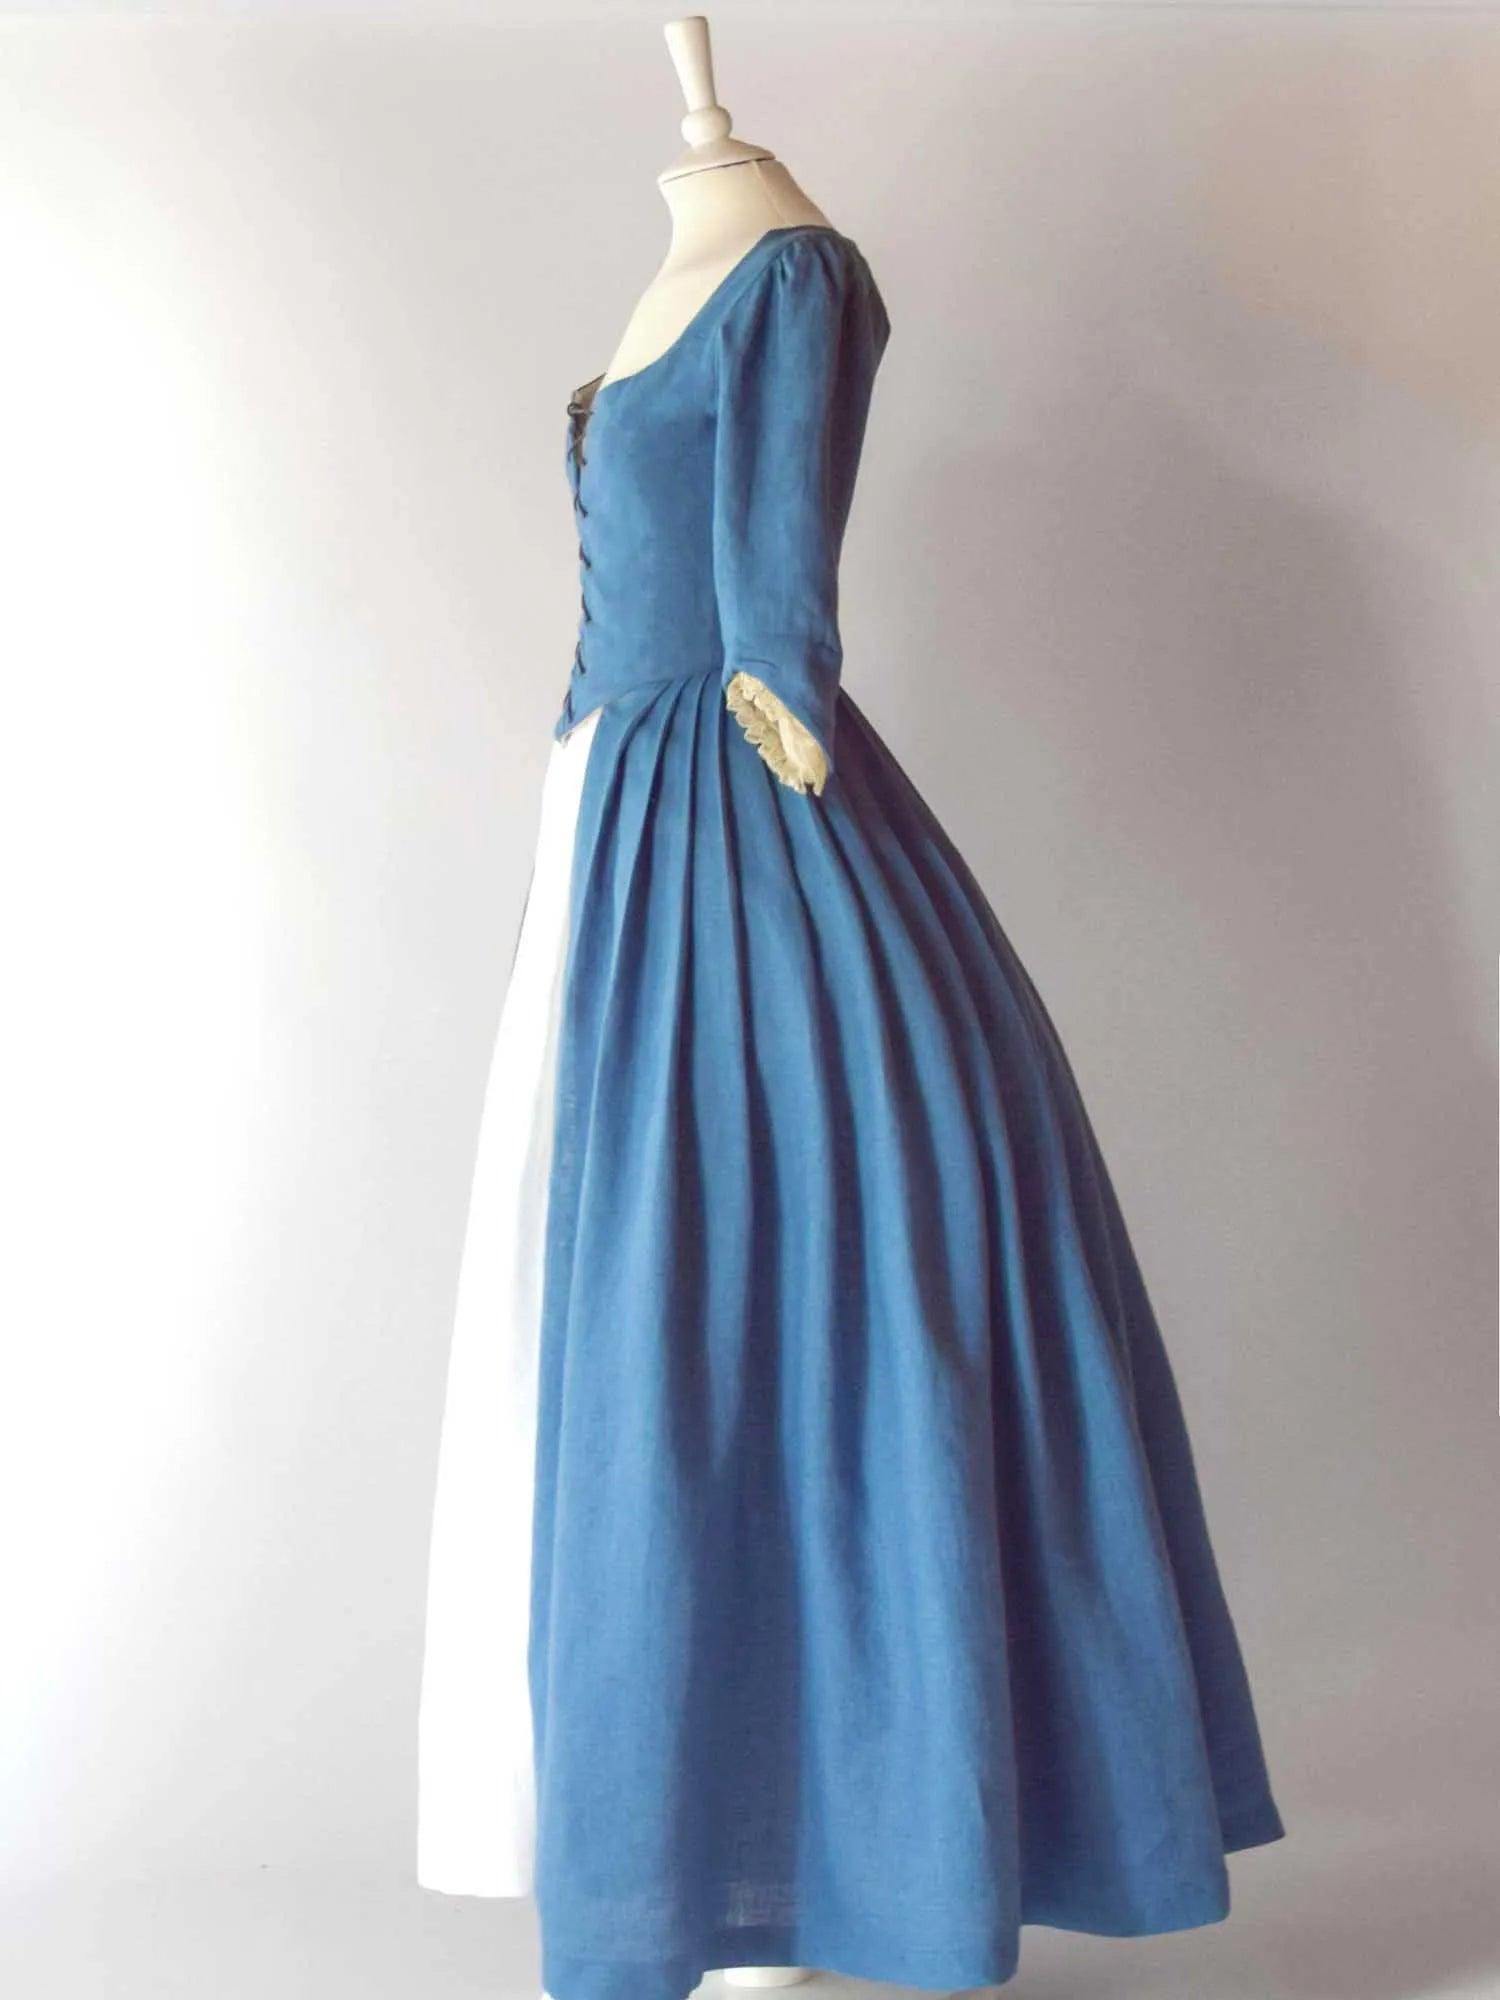 18th Century Overdress in Steel Blue Linen - Atelier Serraspina